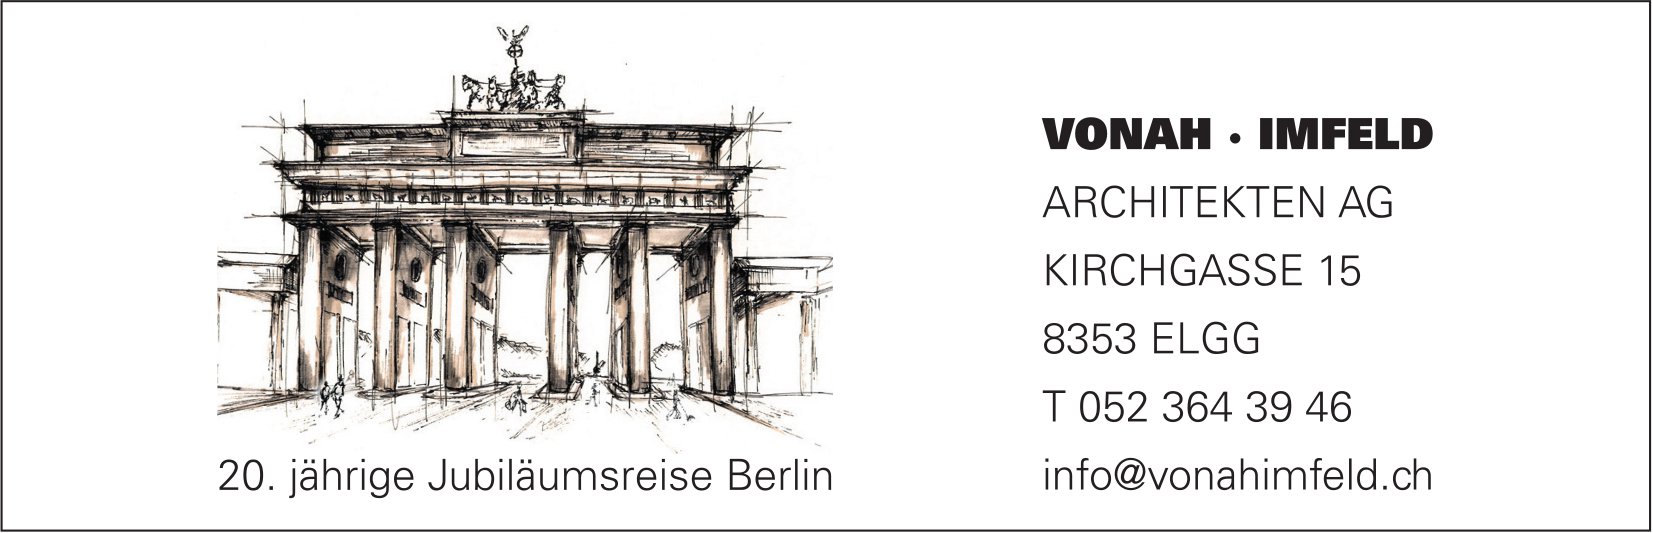 Vonah-Imfeld Architekten AG, Elgg - 20. jährıge Jubiläumsreise Berlin